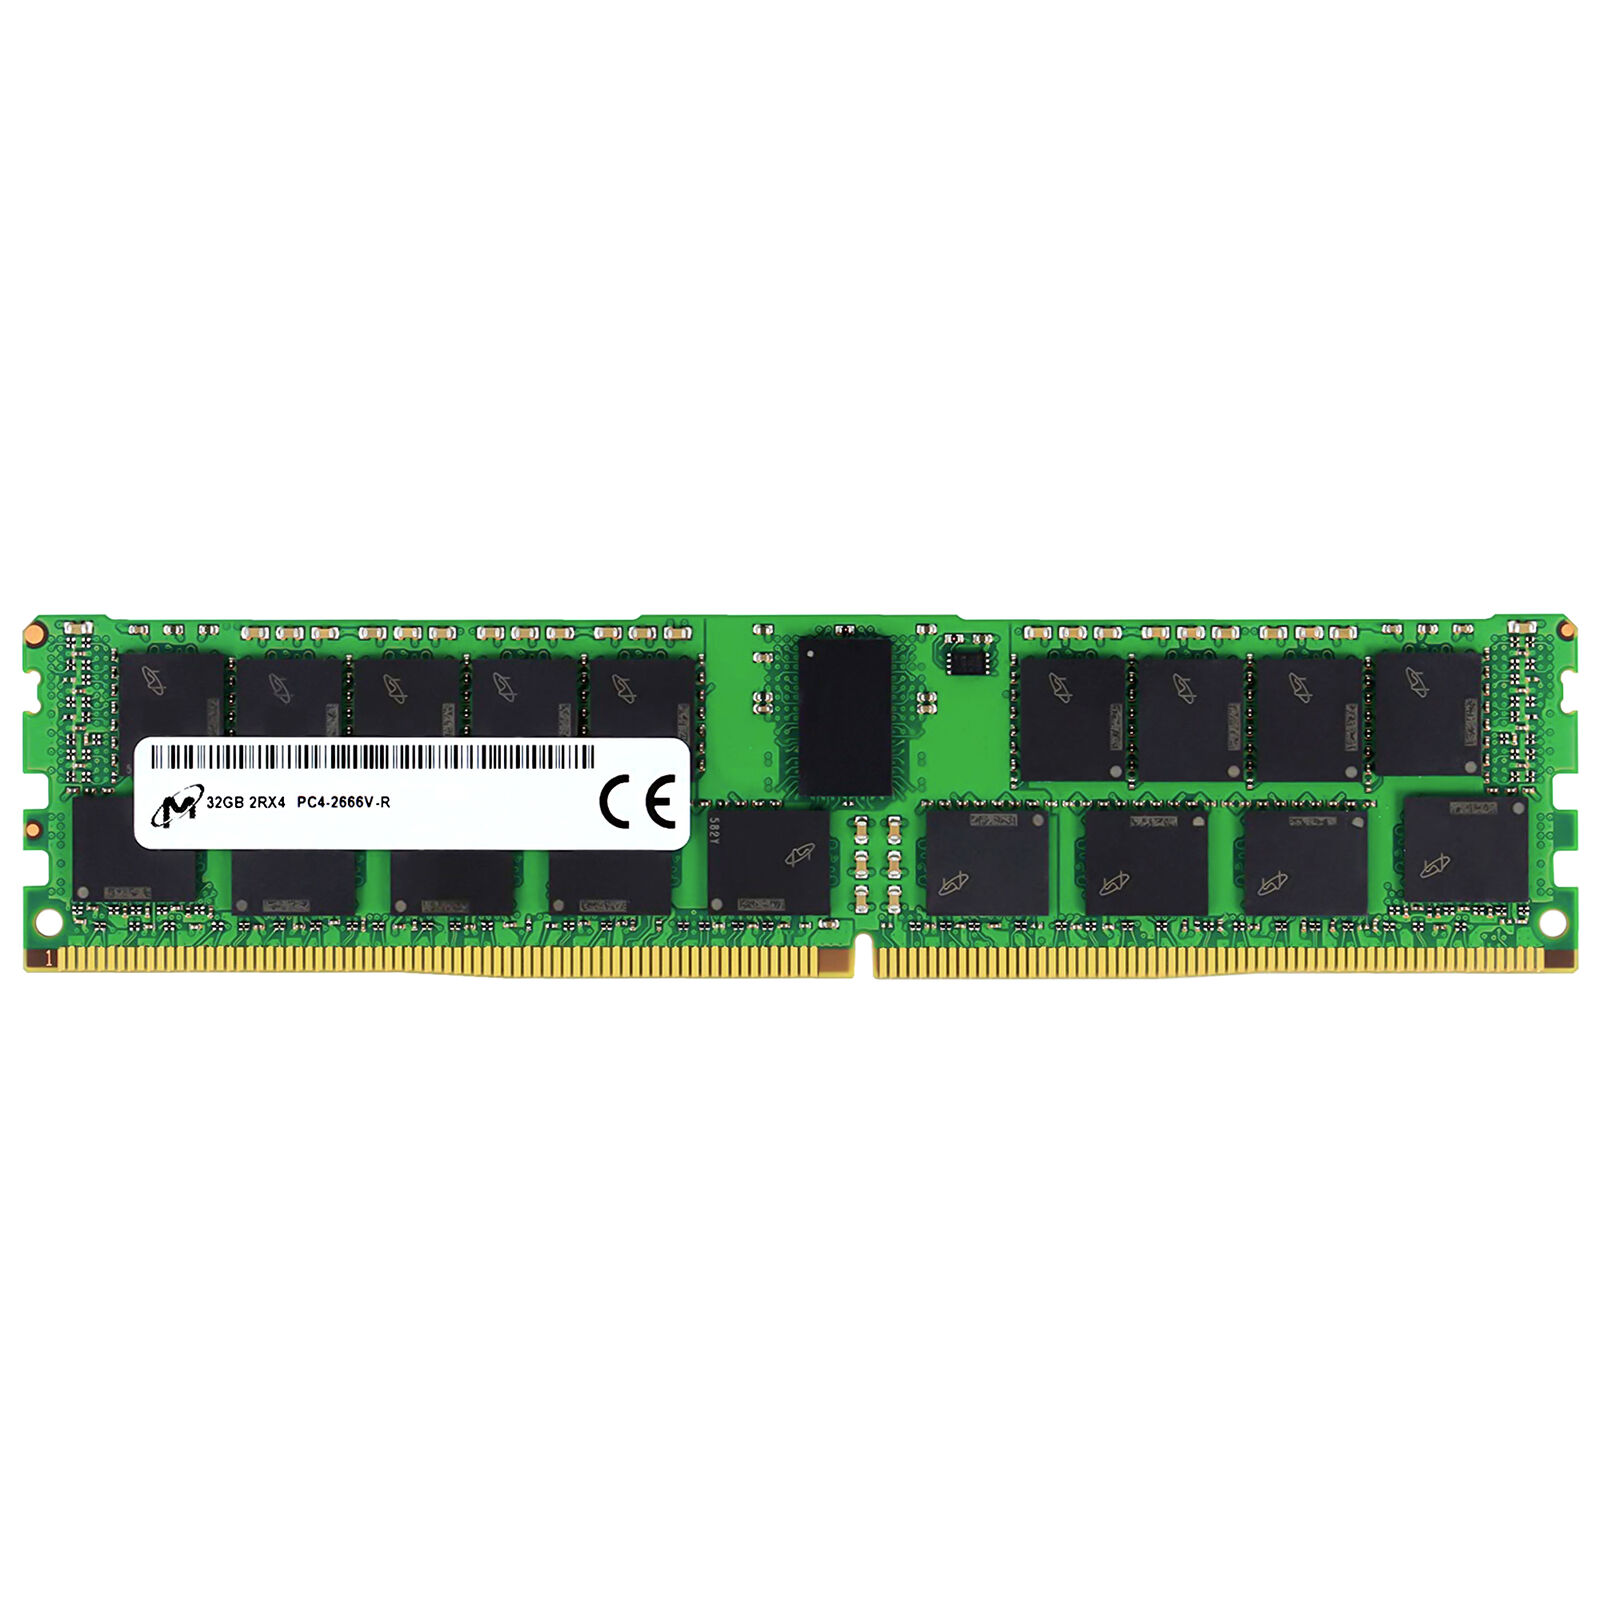 Micron 32GB 2Rx4 PC4-2666V RDIMM DDR4-21300 ECC REG Registered Server Memory RAM